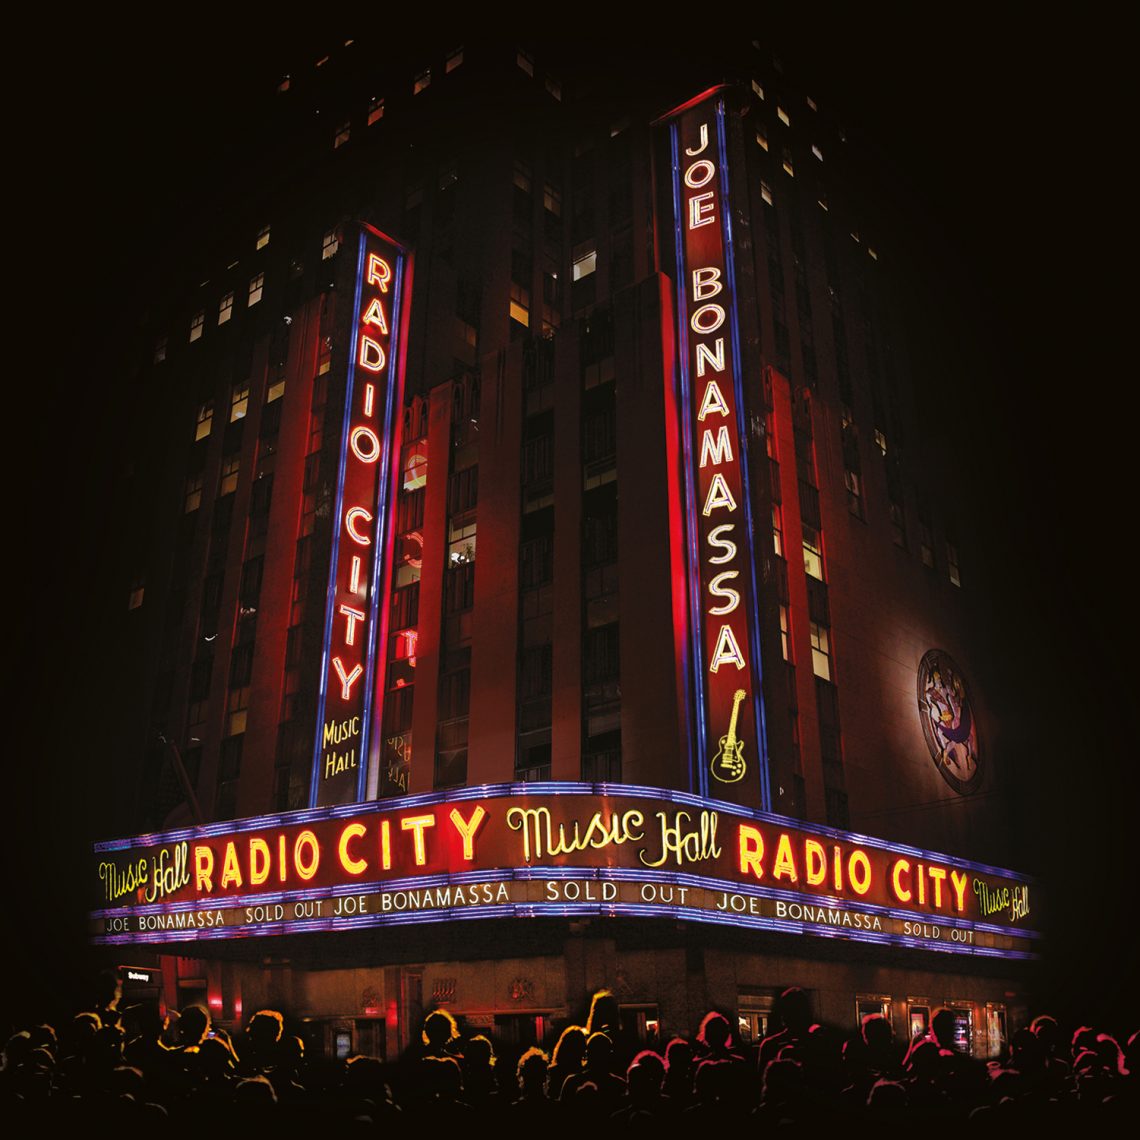 JOE BONAMASSA RELEASES  “LIVE AT RADIO CITY MUSIC HALL” ON 2ND OCTOBER